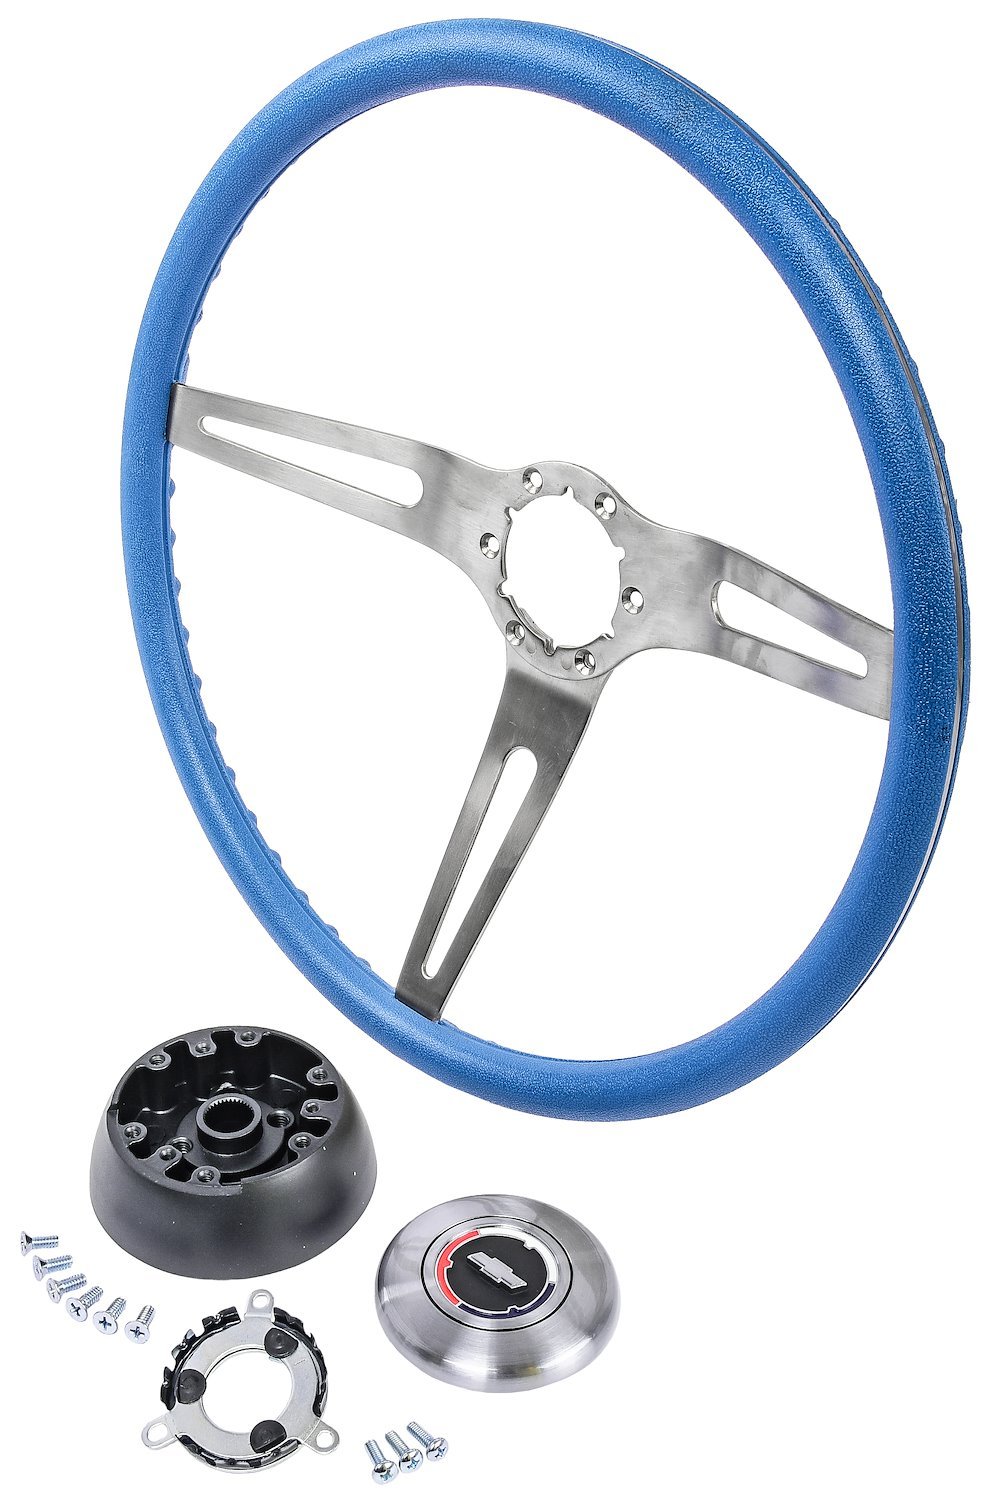 3-Spoke Comfort Grip Steering Wheel Kit Fits Select 1969-1972 Chevrolet Cars [Blue Grip]